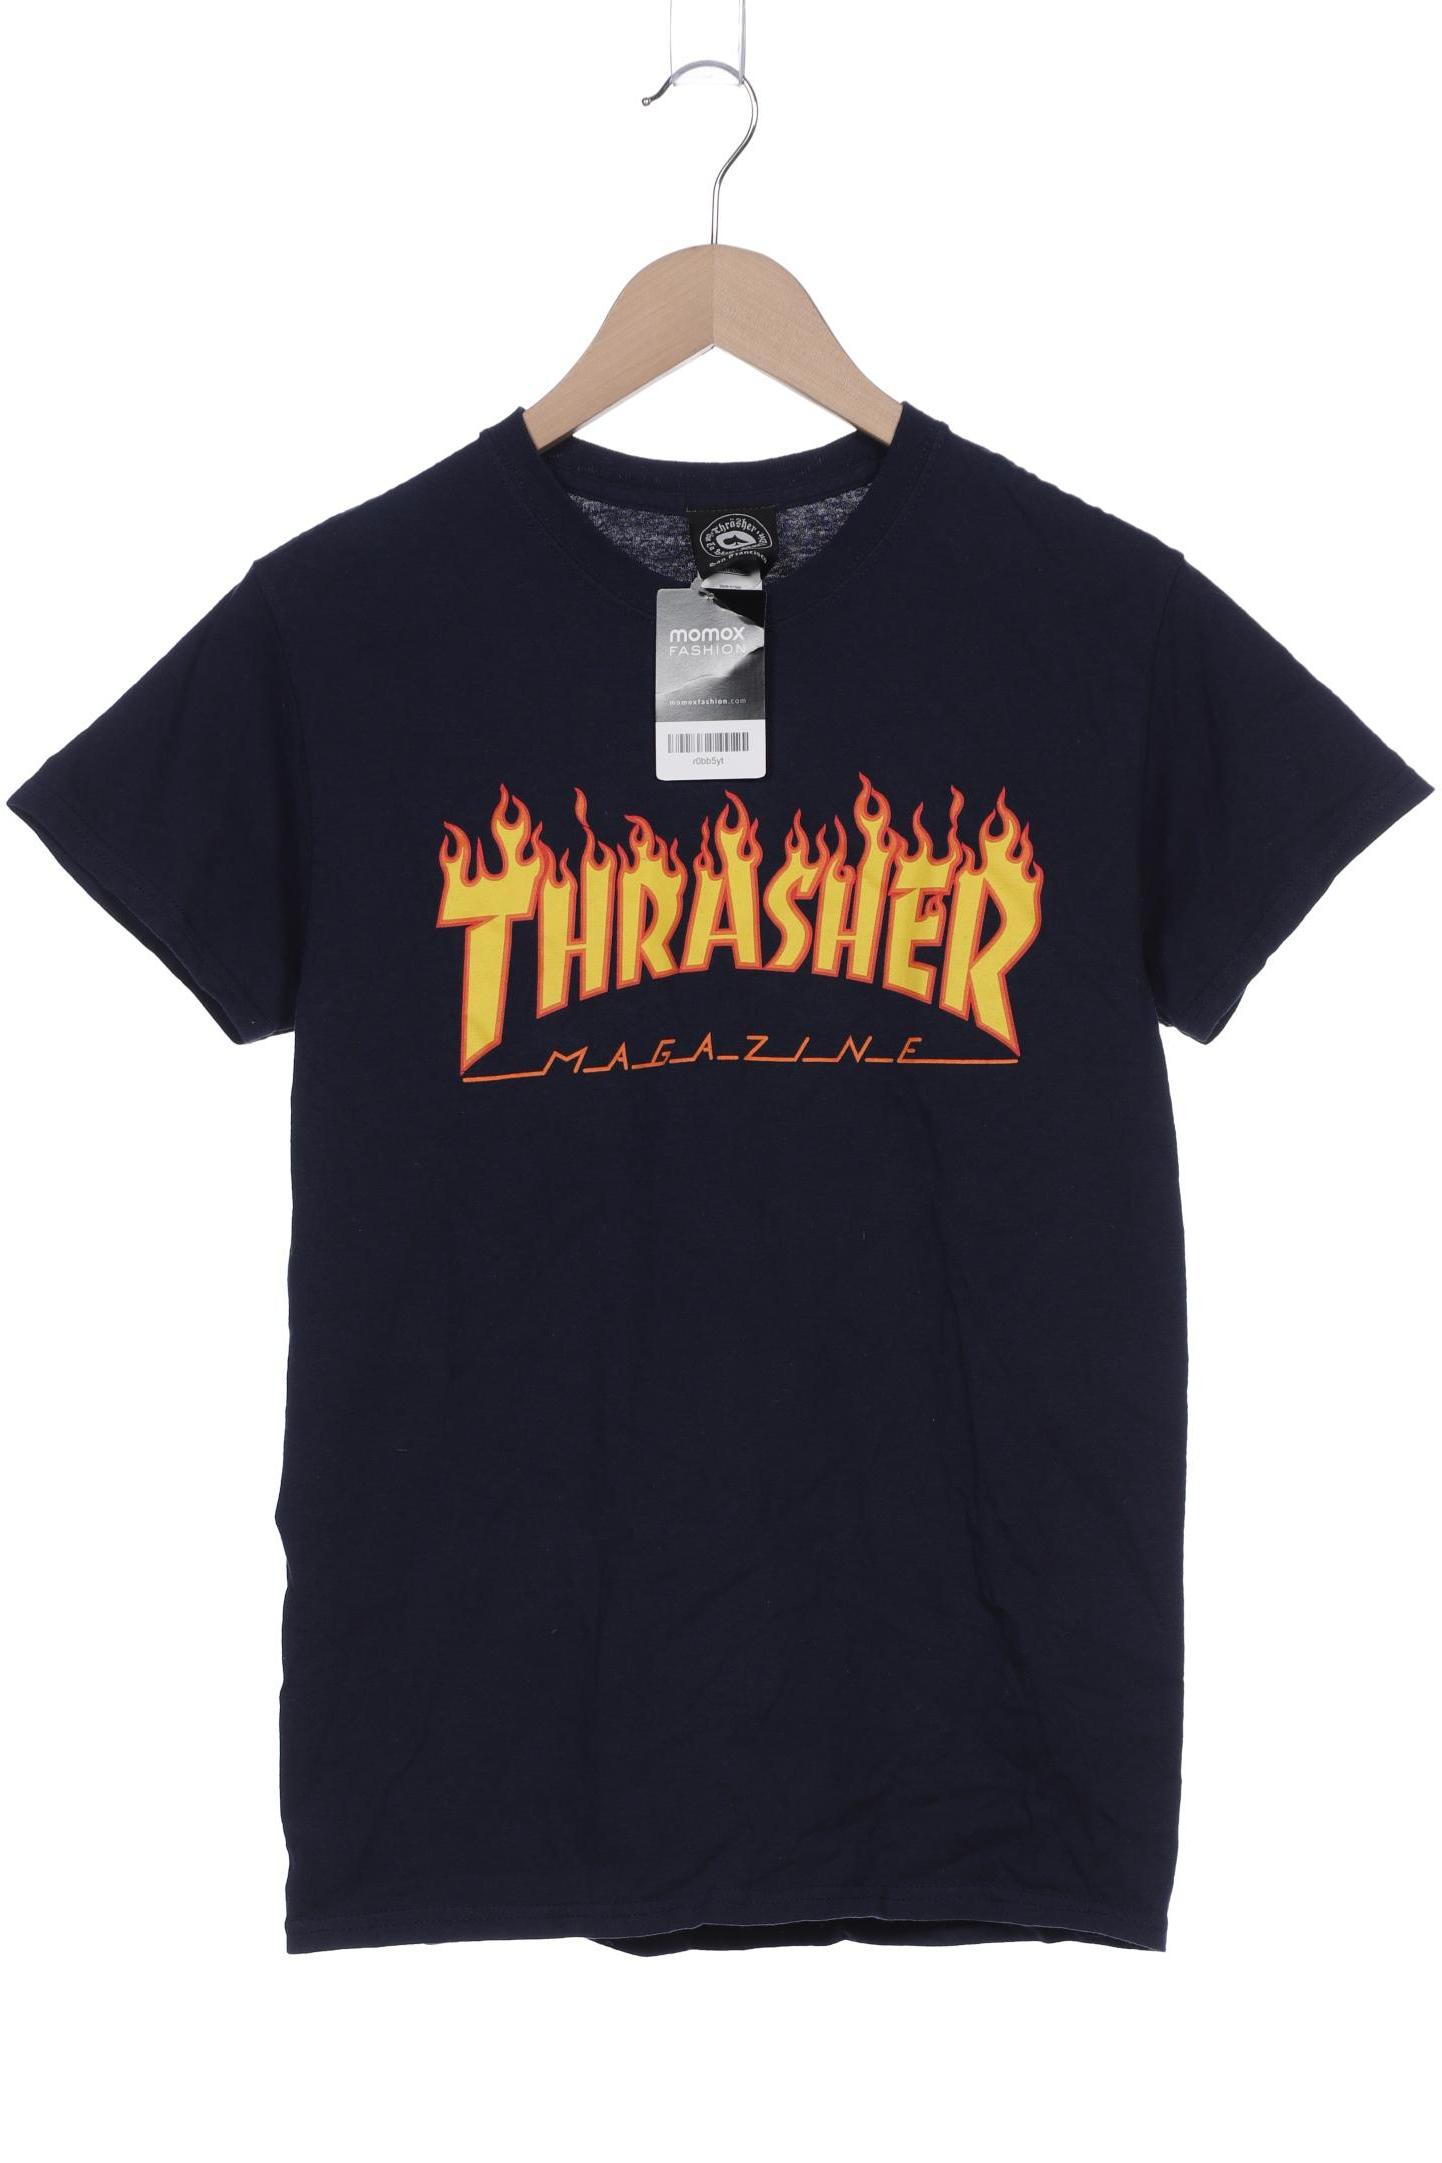 Thrasher Herren T-Shirt, marineblau von Thrasher